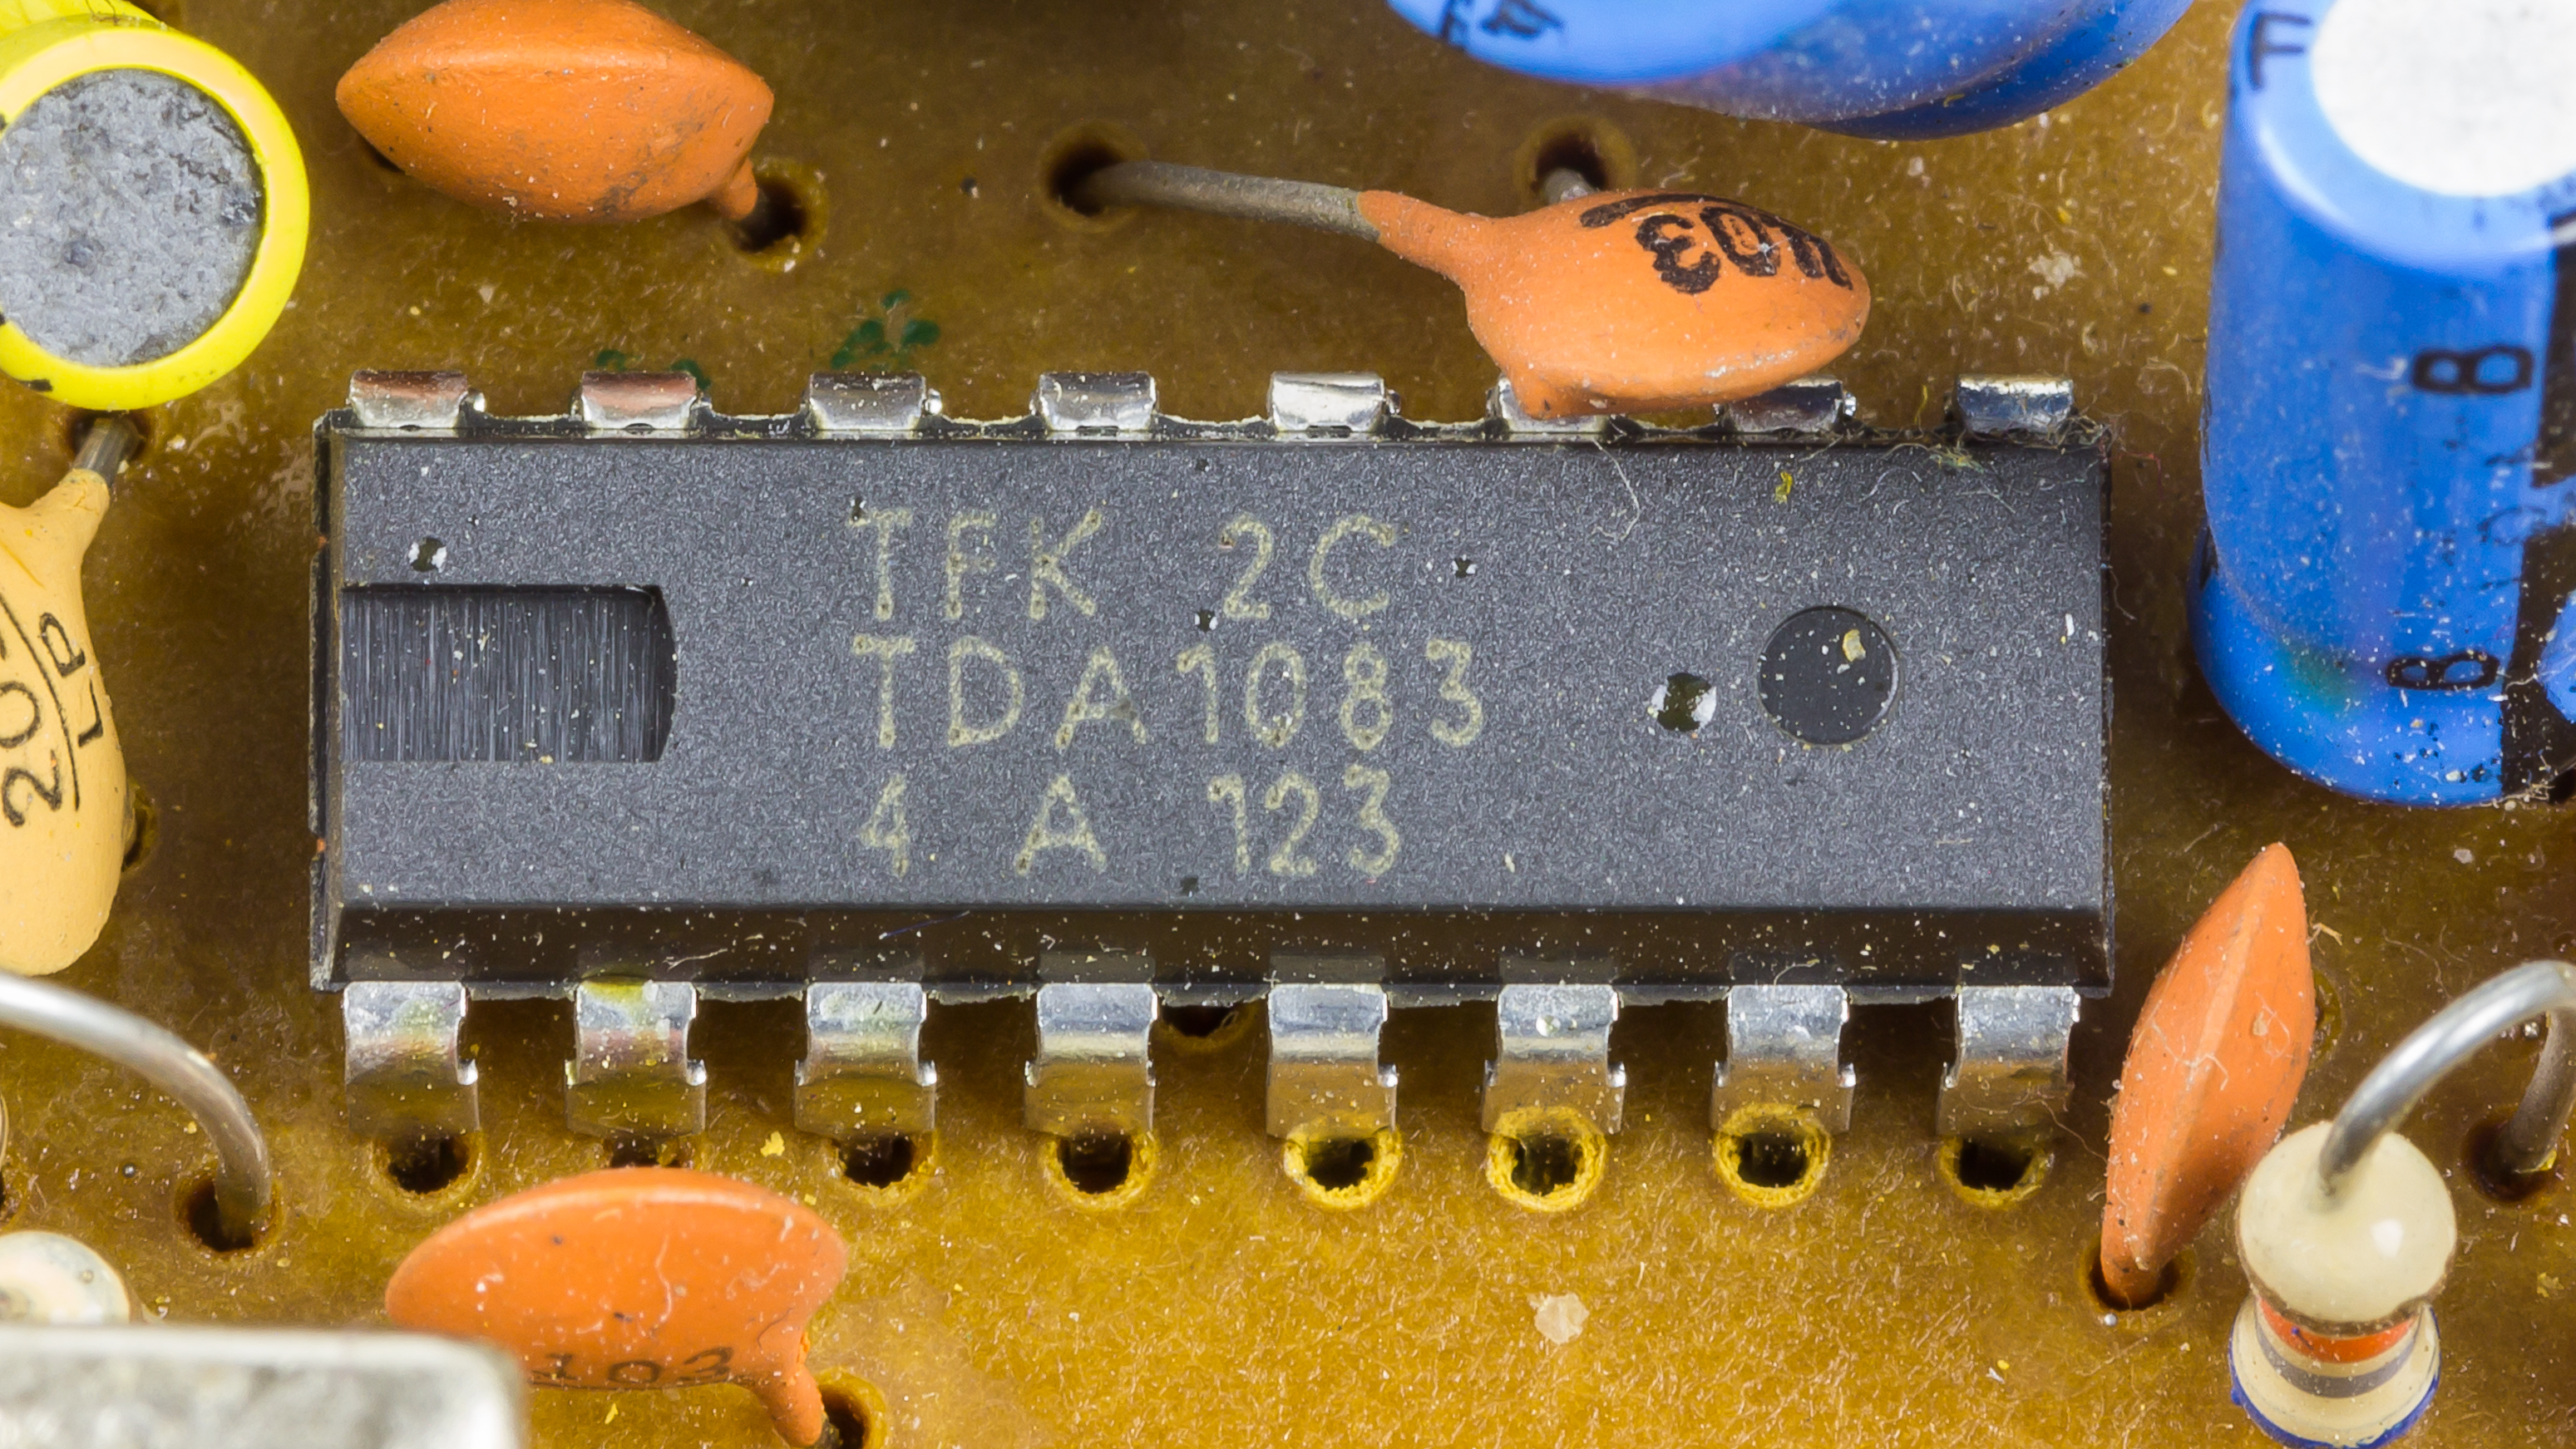 TDA1083 3-12V DIP16 Empfänger +NF-Verstärker,Orig.TELEFUNKEN AM-/FM 10 Stück 